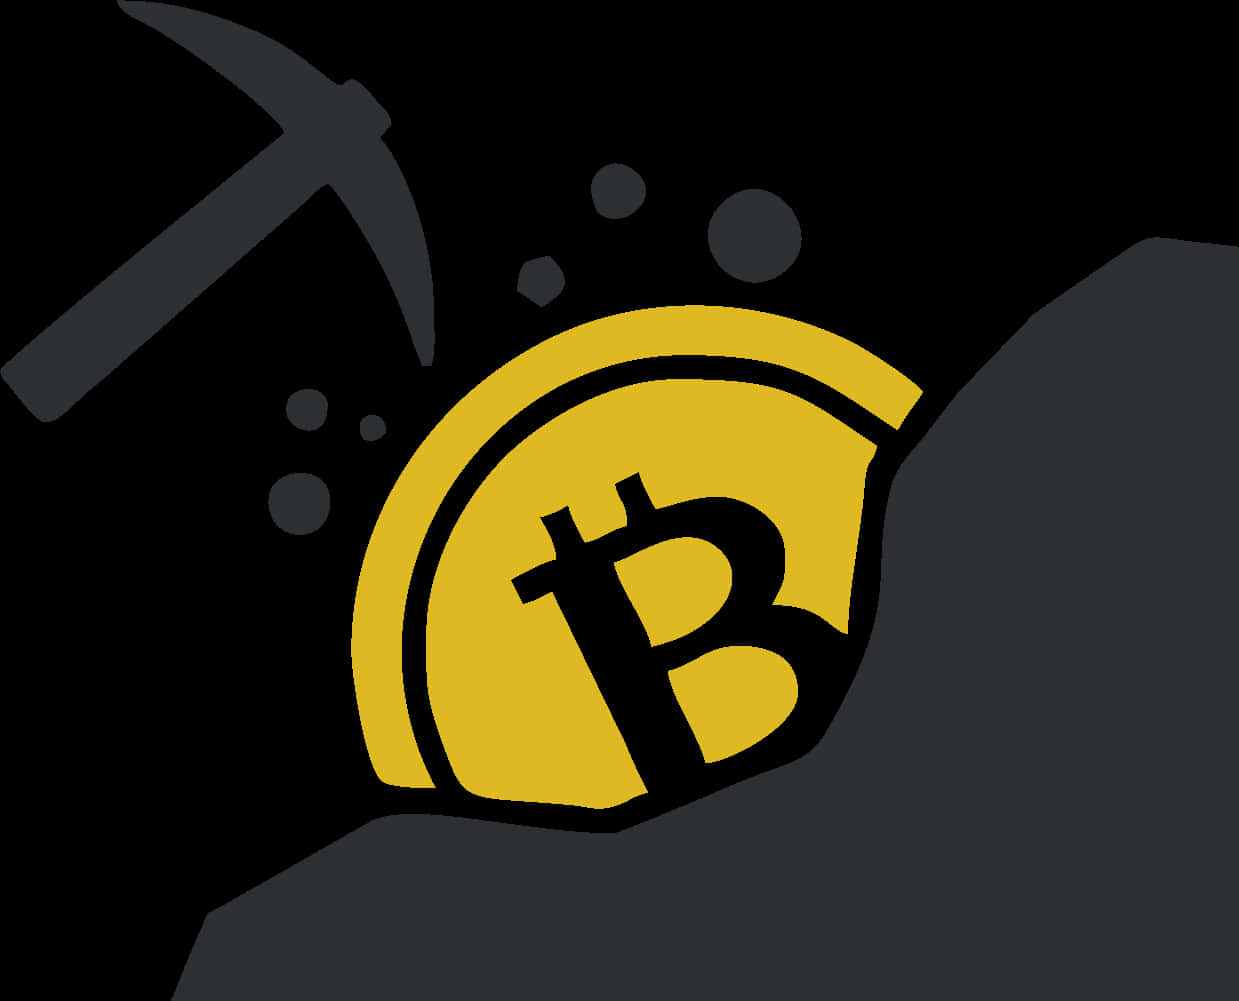 Bitcoin Mining Concept Art